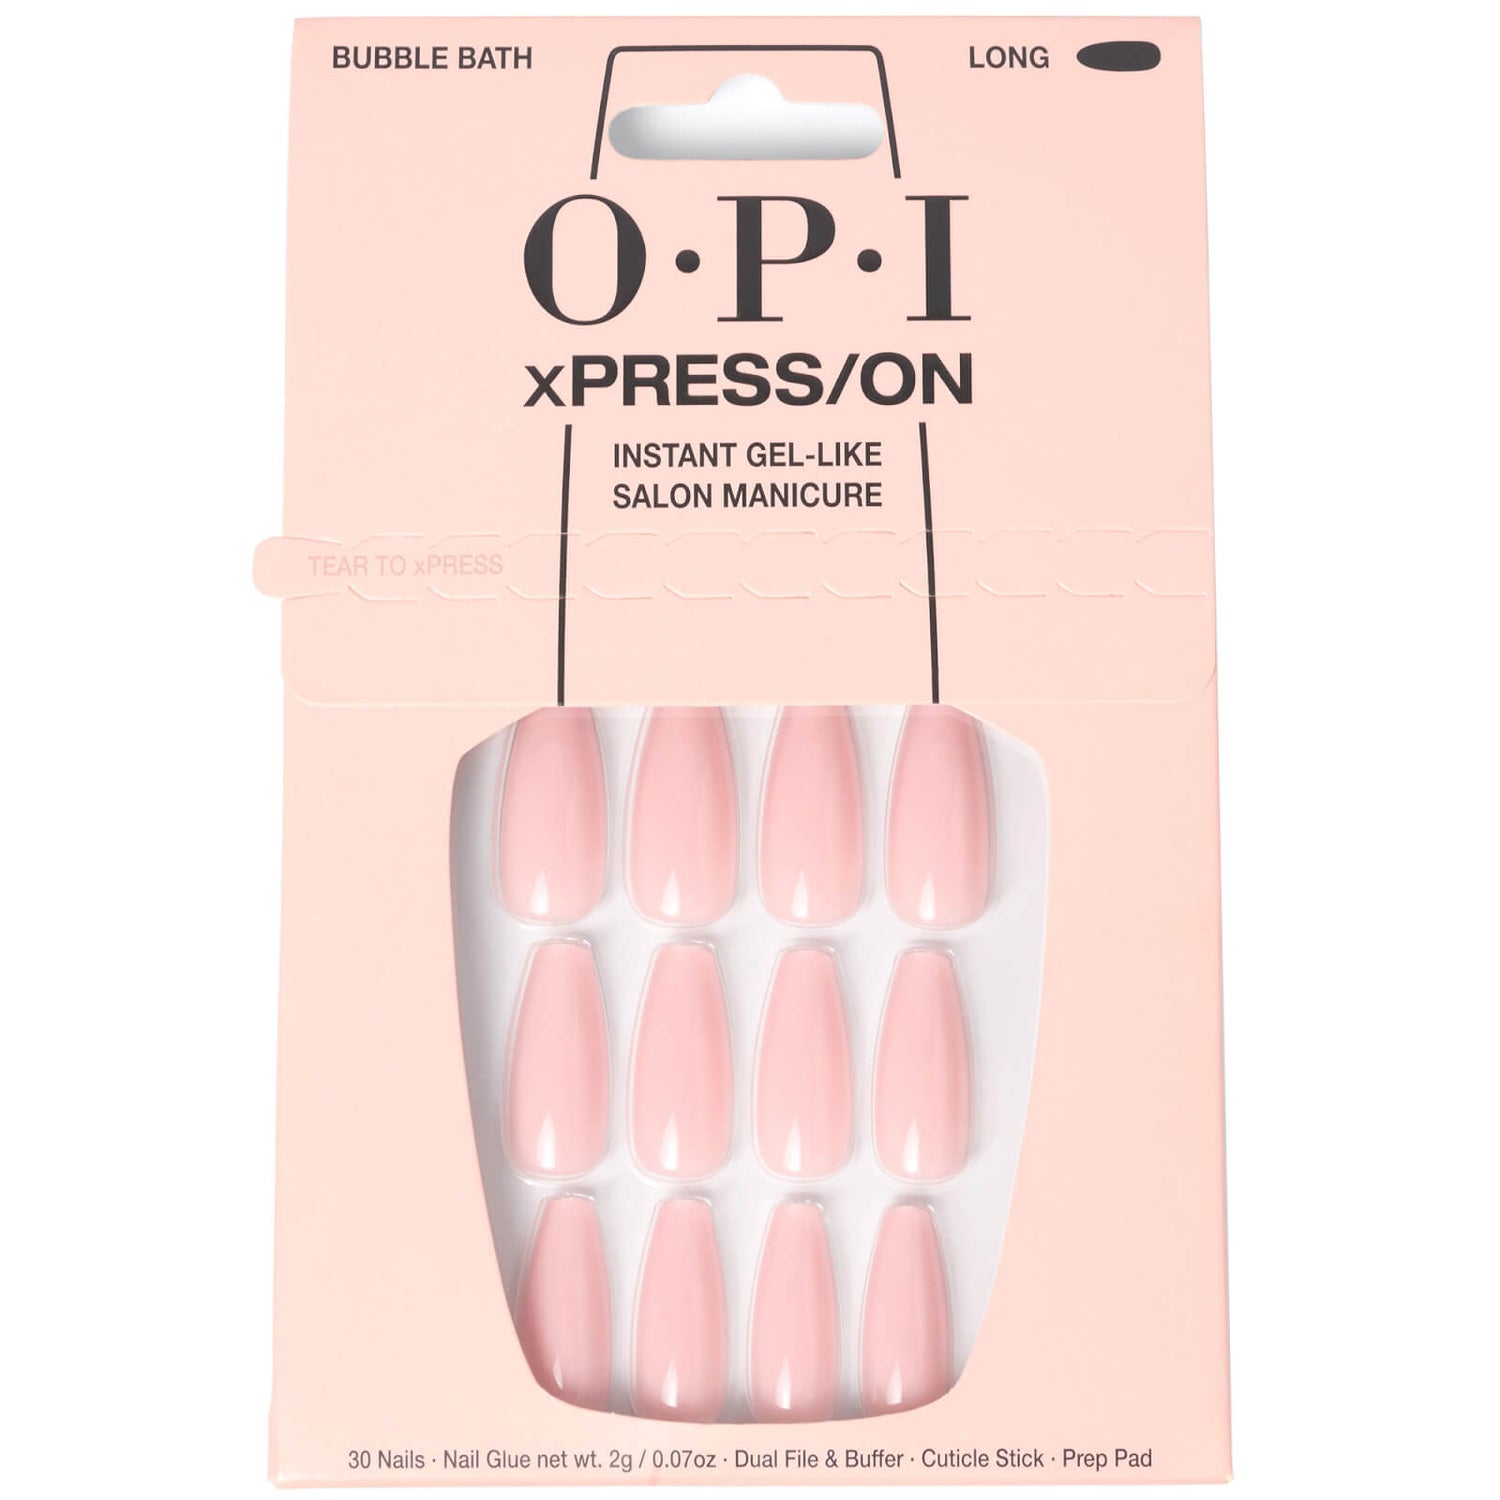 OPI xPRESS/ON - Bubble Bath- LONG Press On Nails Gel-Like Salon Manicure